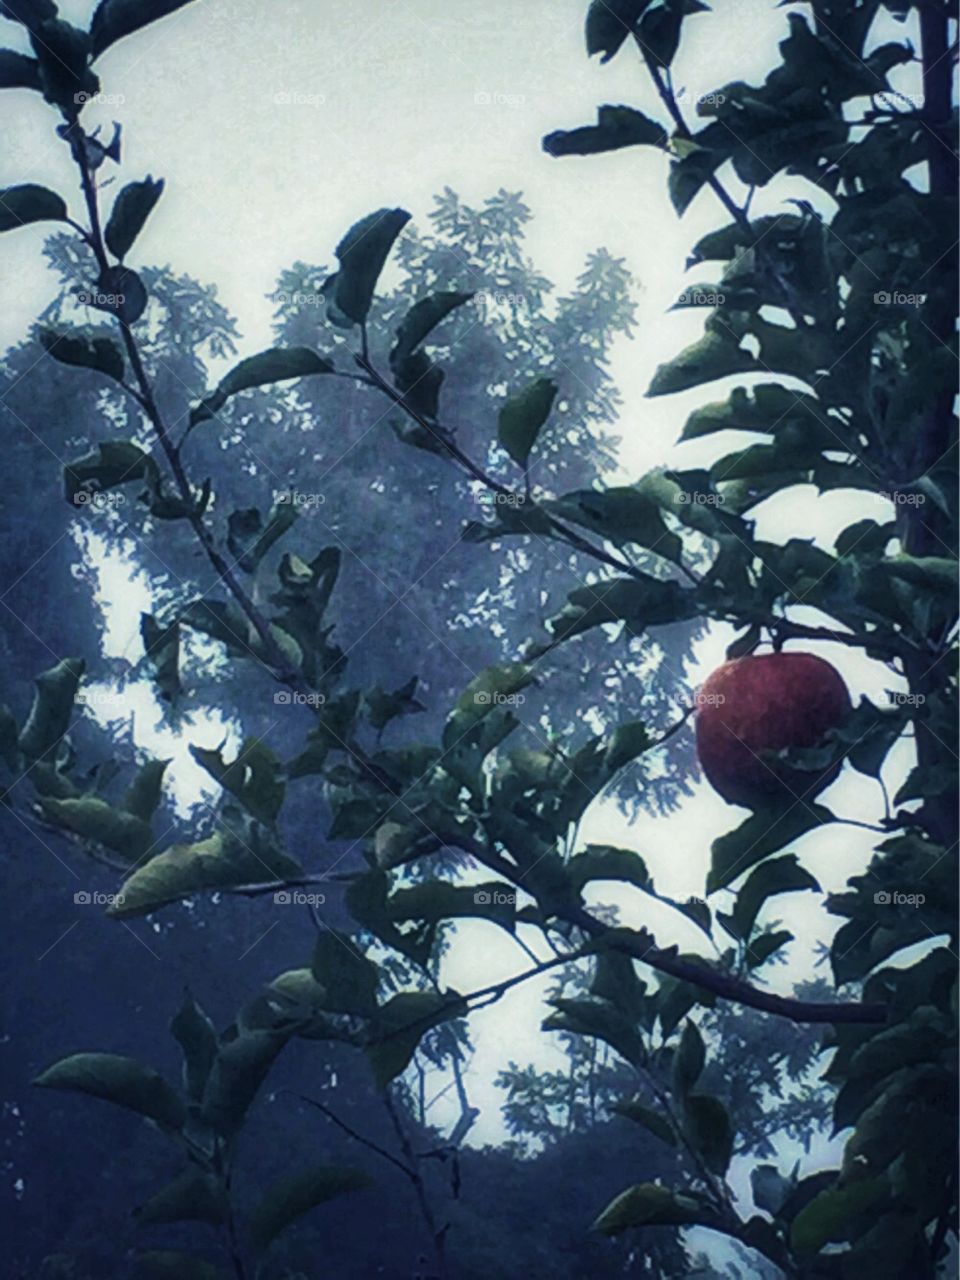 Solitary Apple